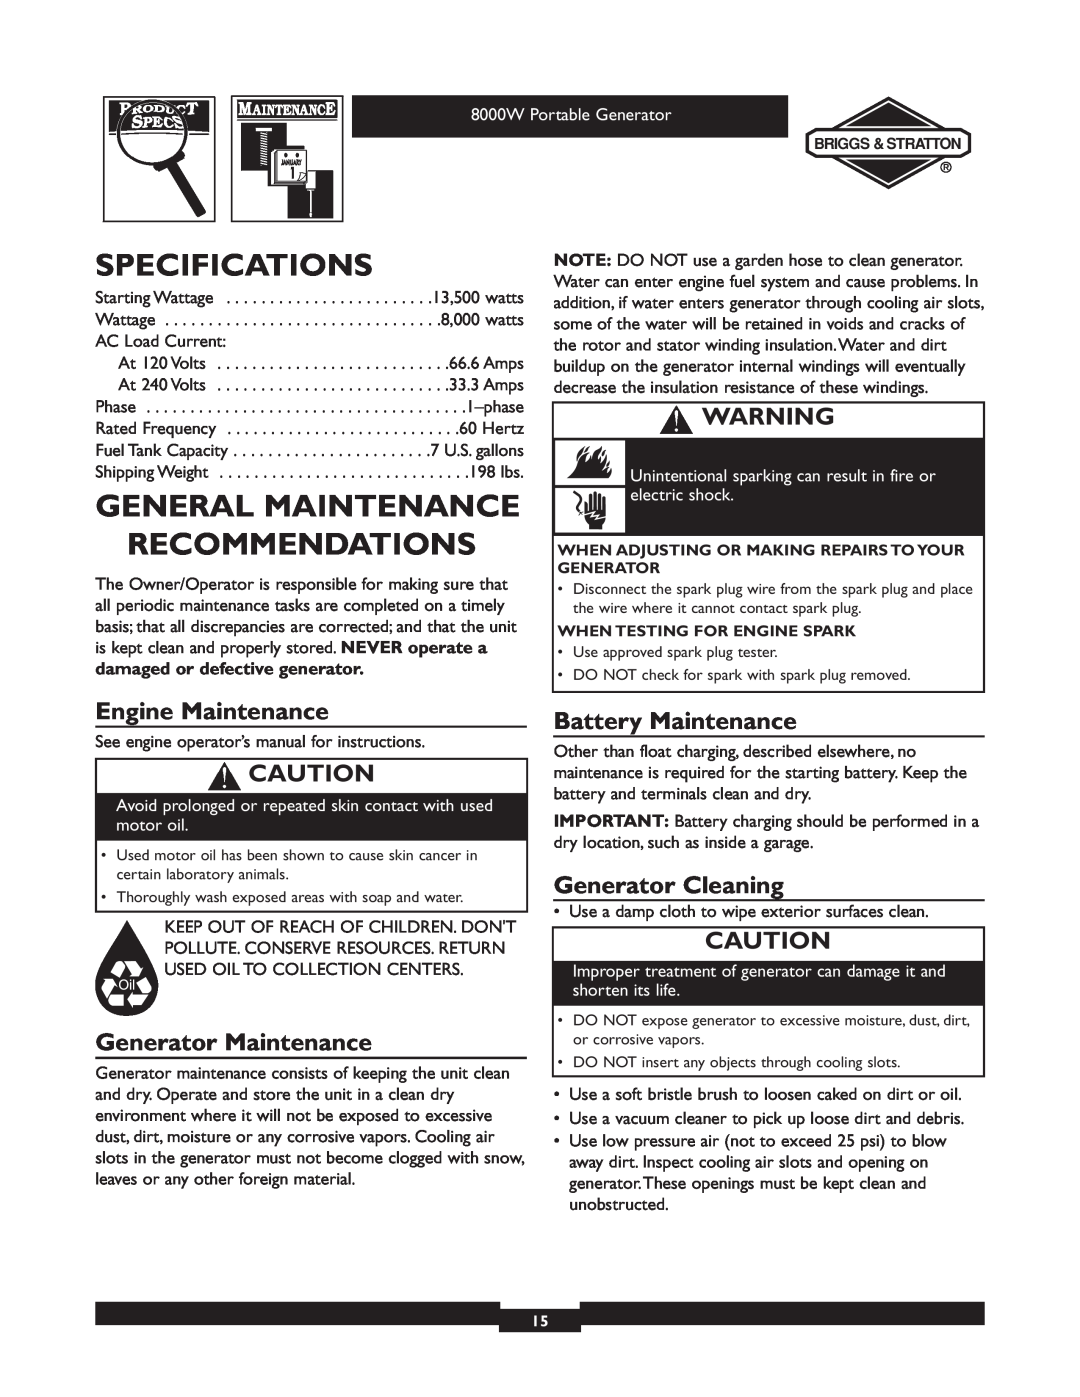 Briggs & Stratton 030210-2 Specifications, General Maintenance Recommendations, Engine Maintenance, Generator Maintenance 